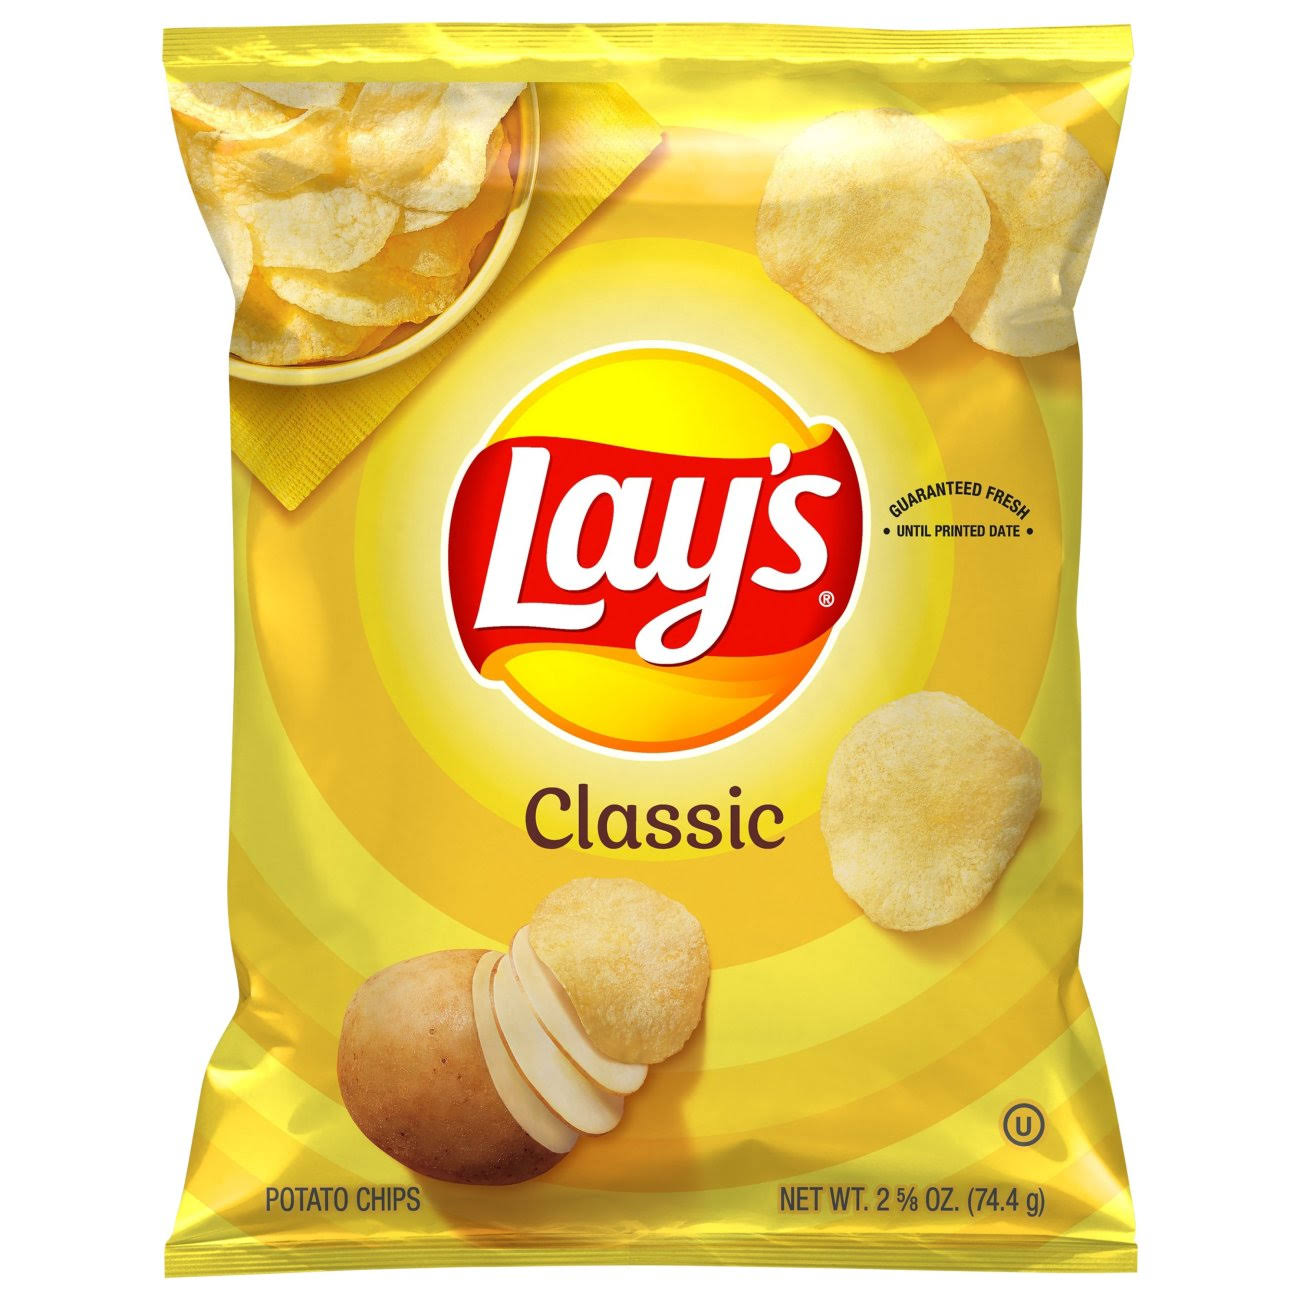 Lay's Potato Chips, Classic - 2.625 oz